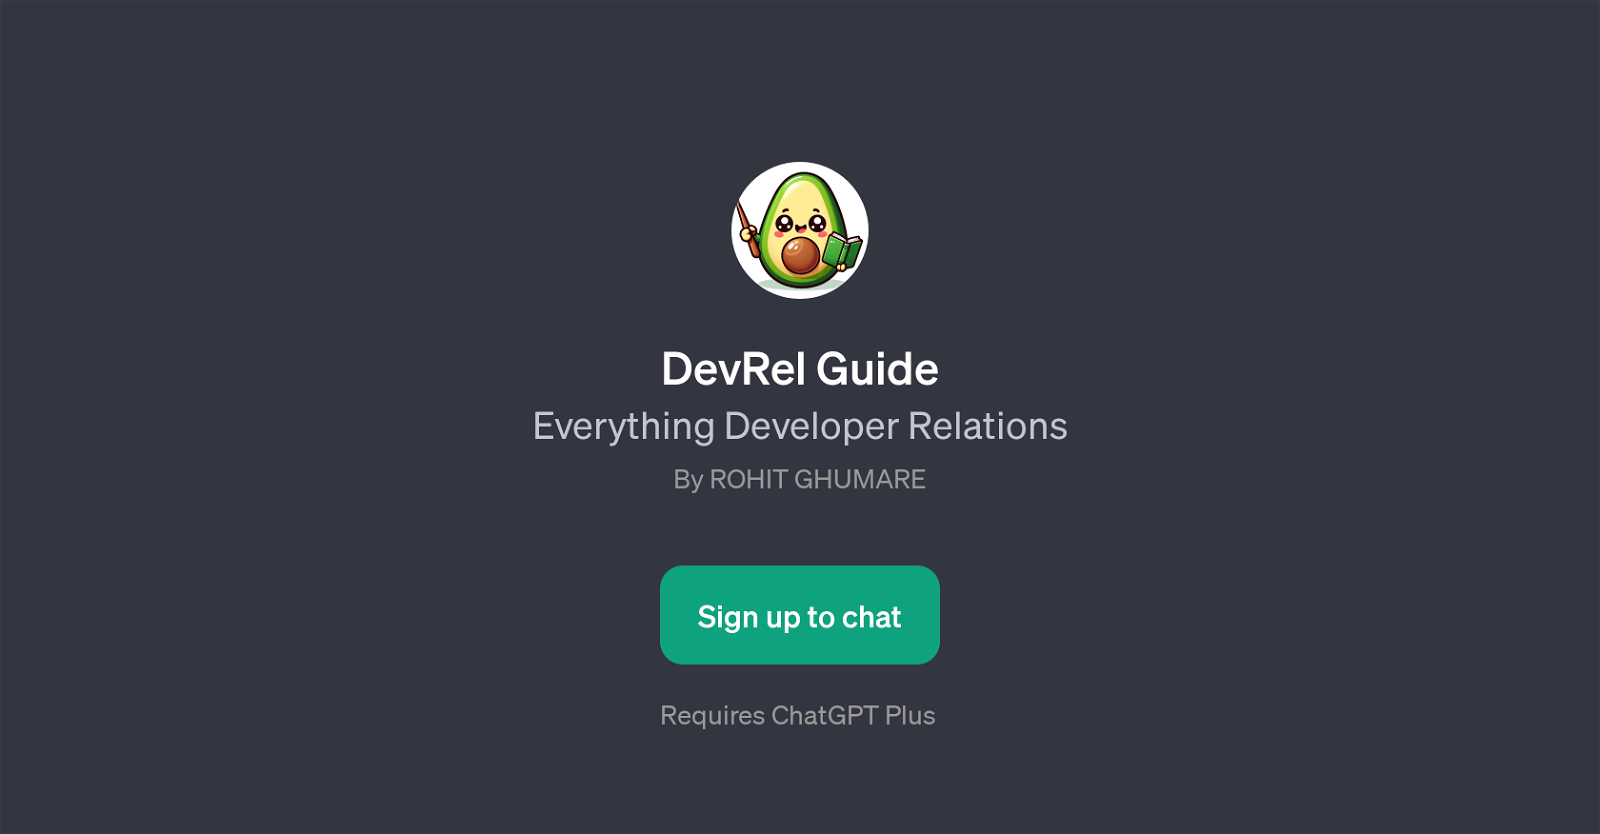 DevRel Guide website